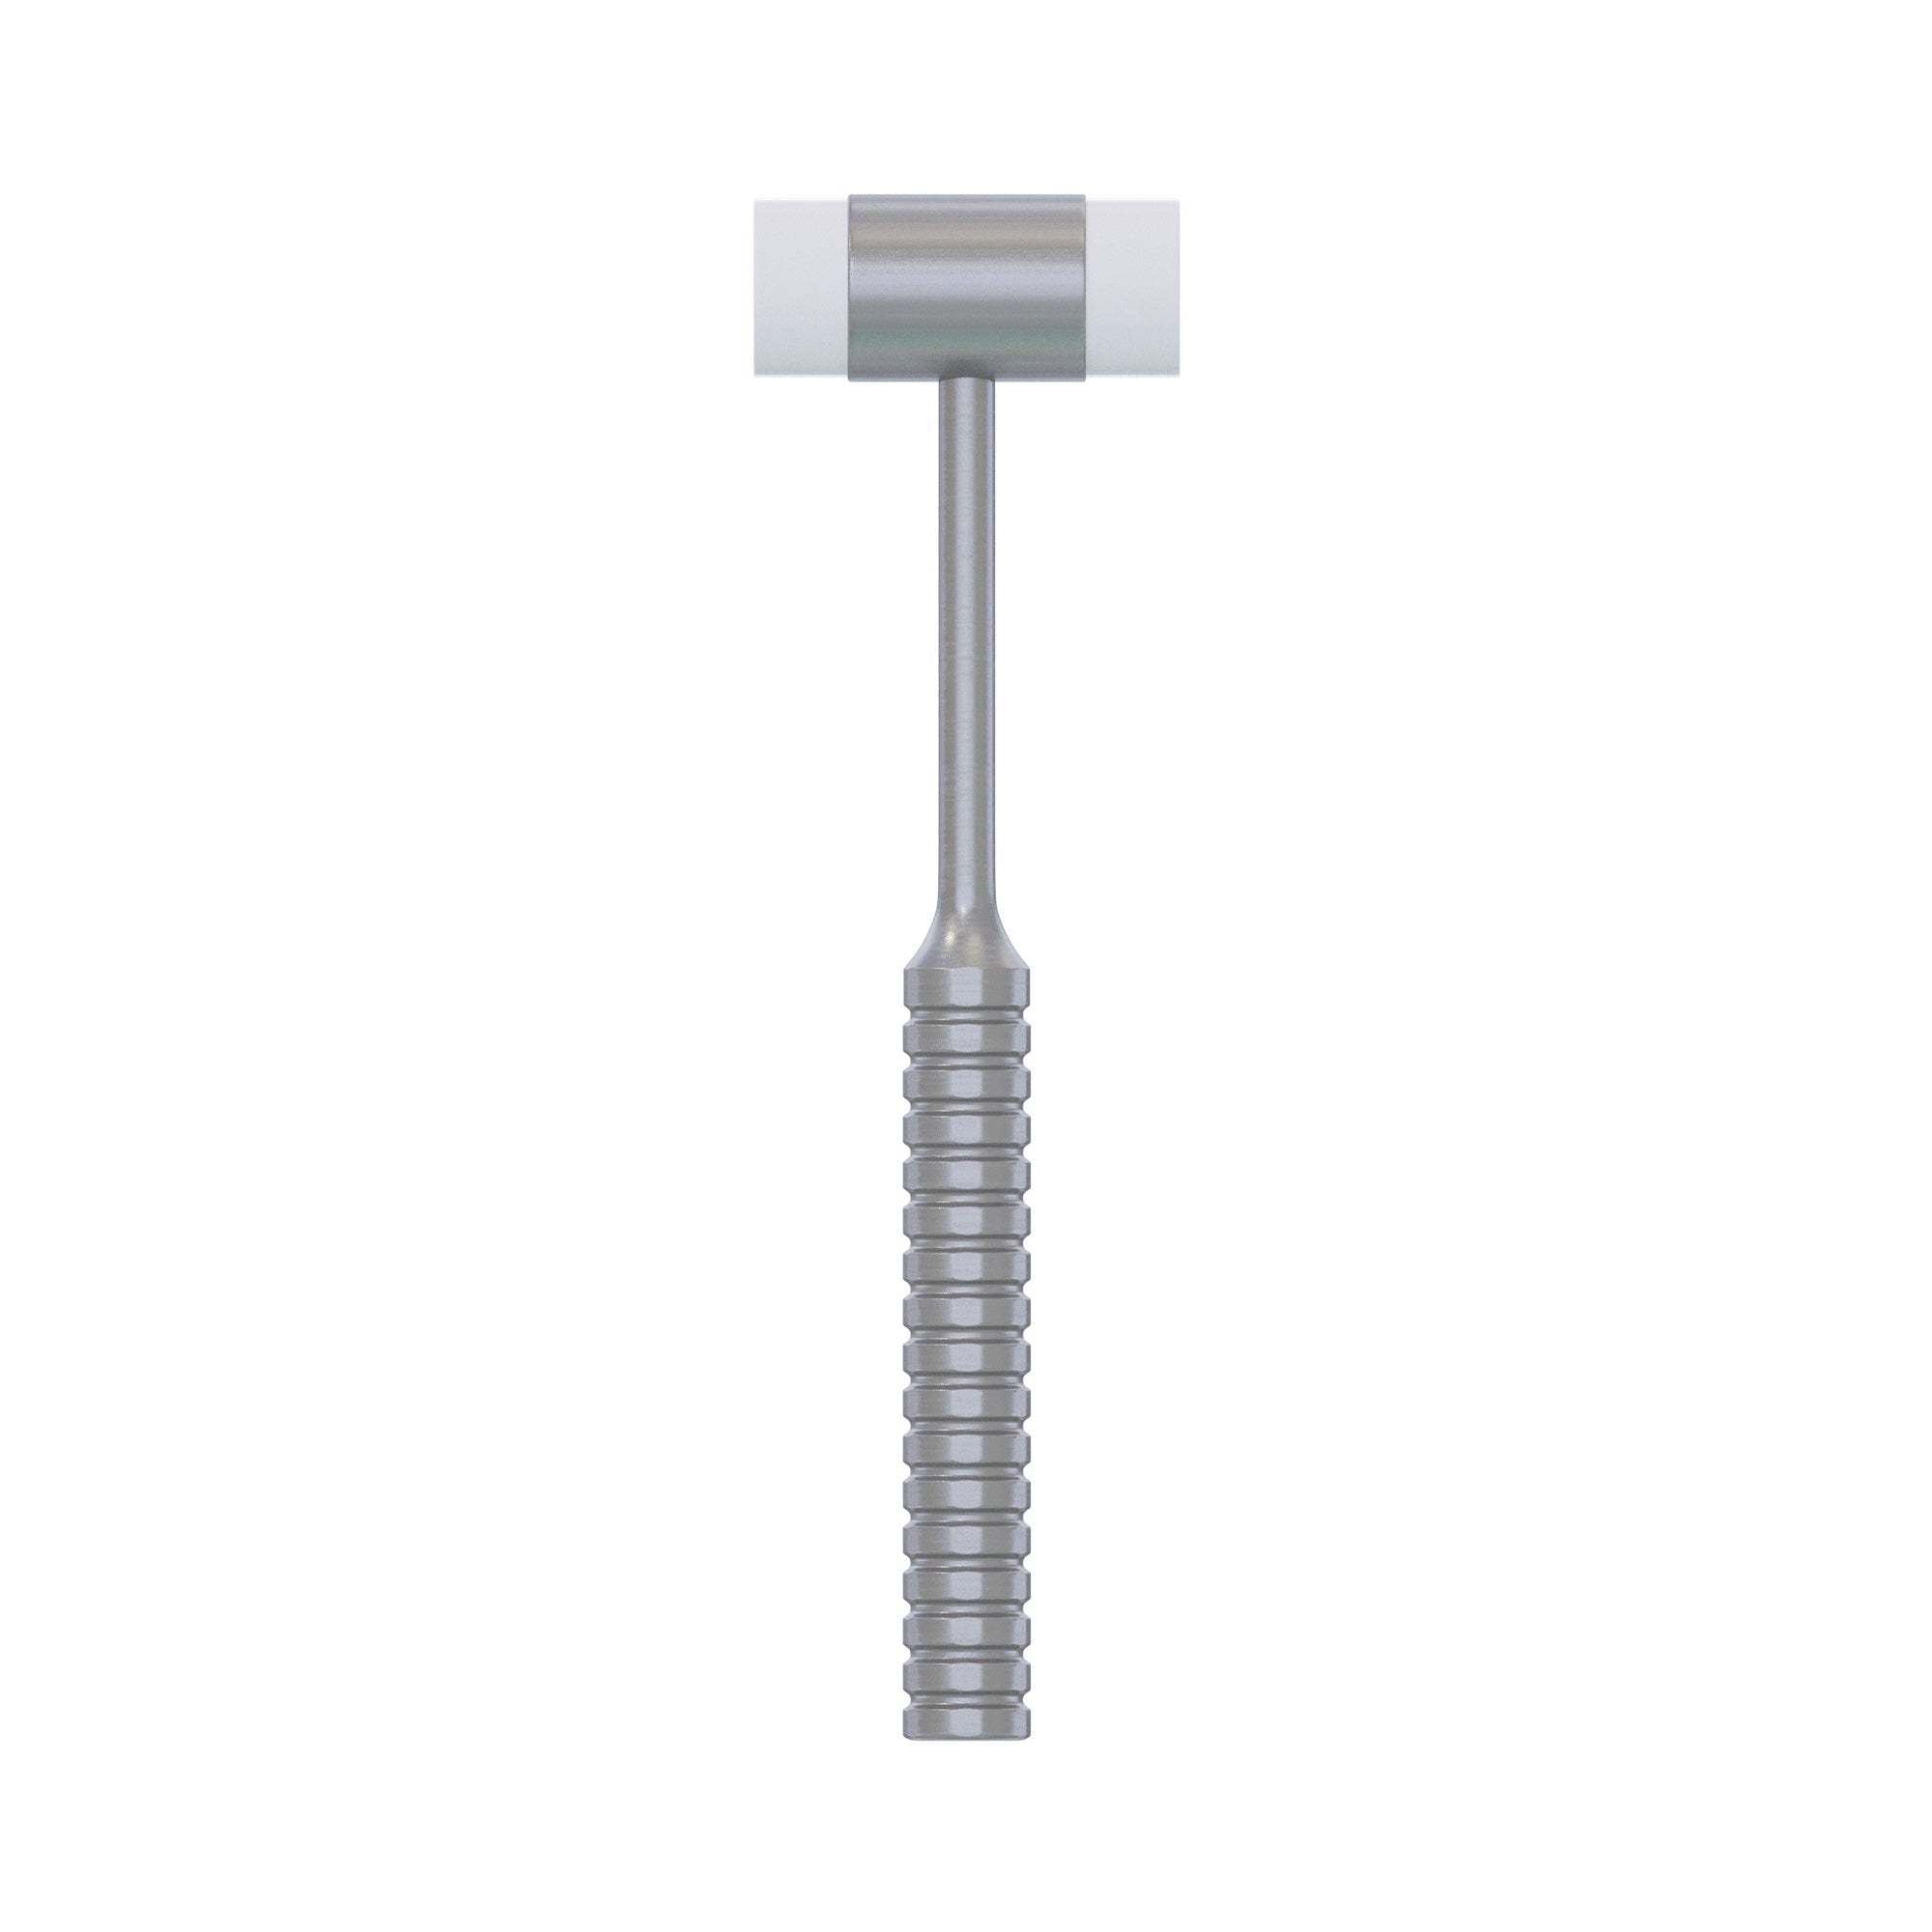 DSI GBR Surgical Mallet For Bone Tack Insertion 162mm